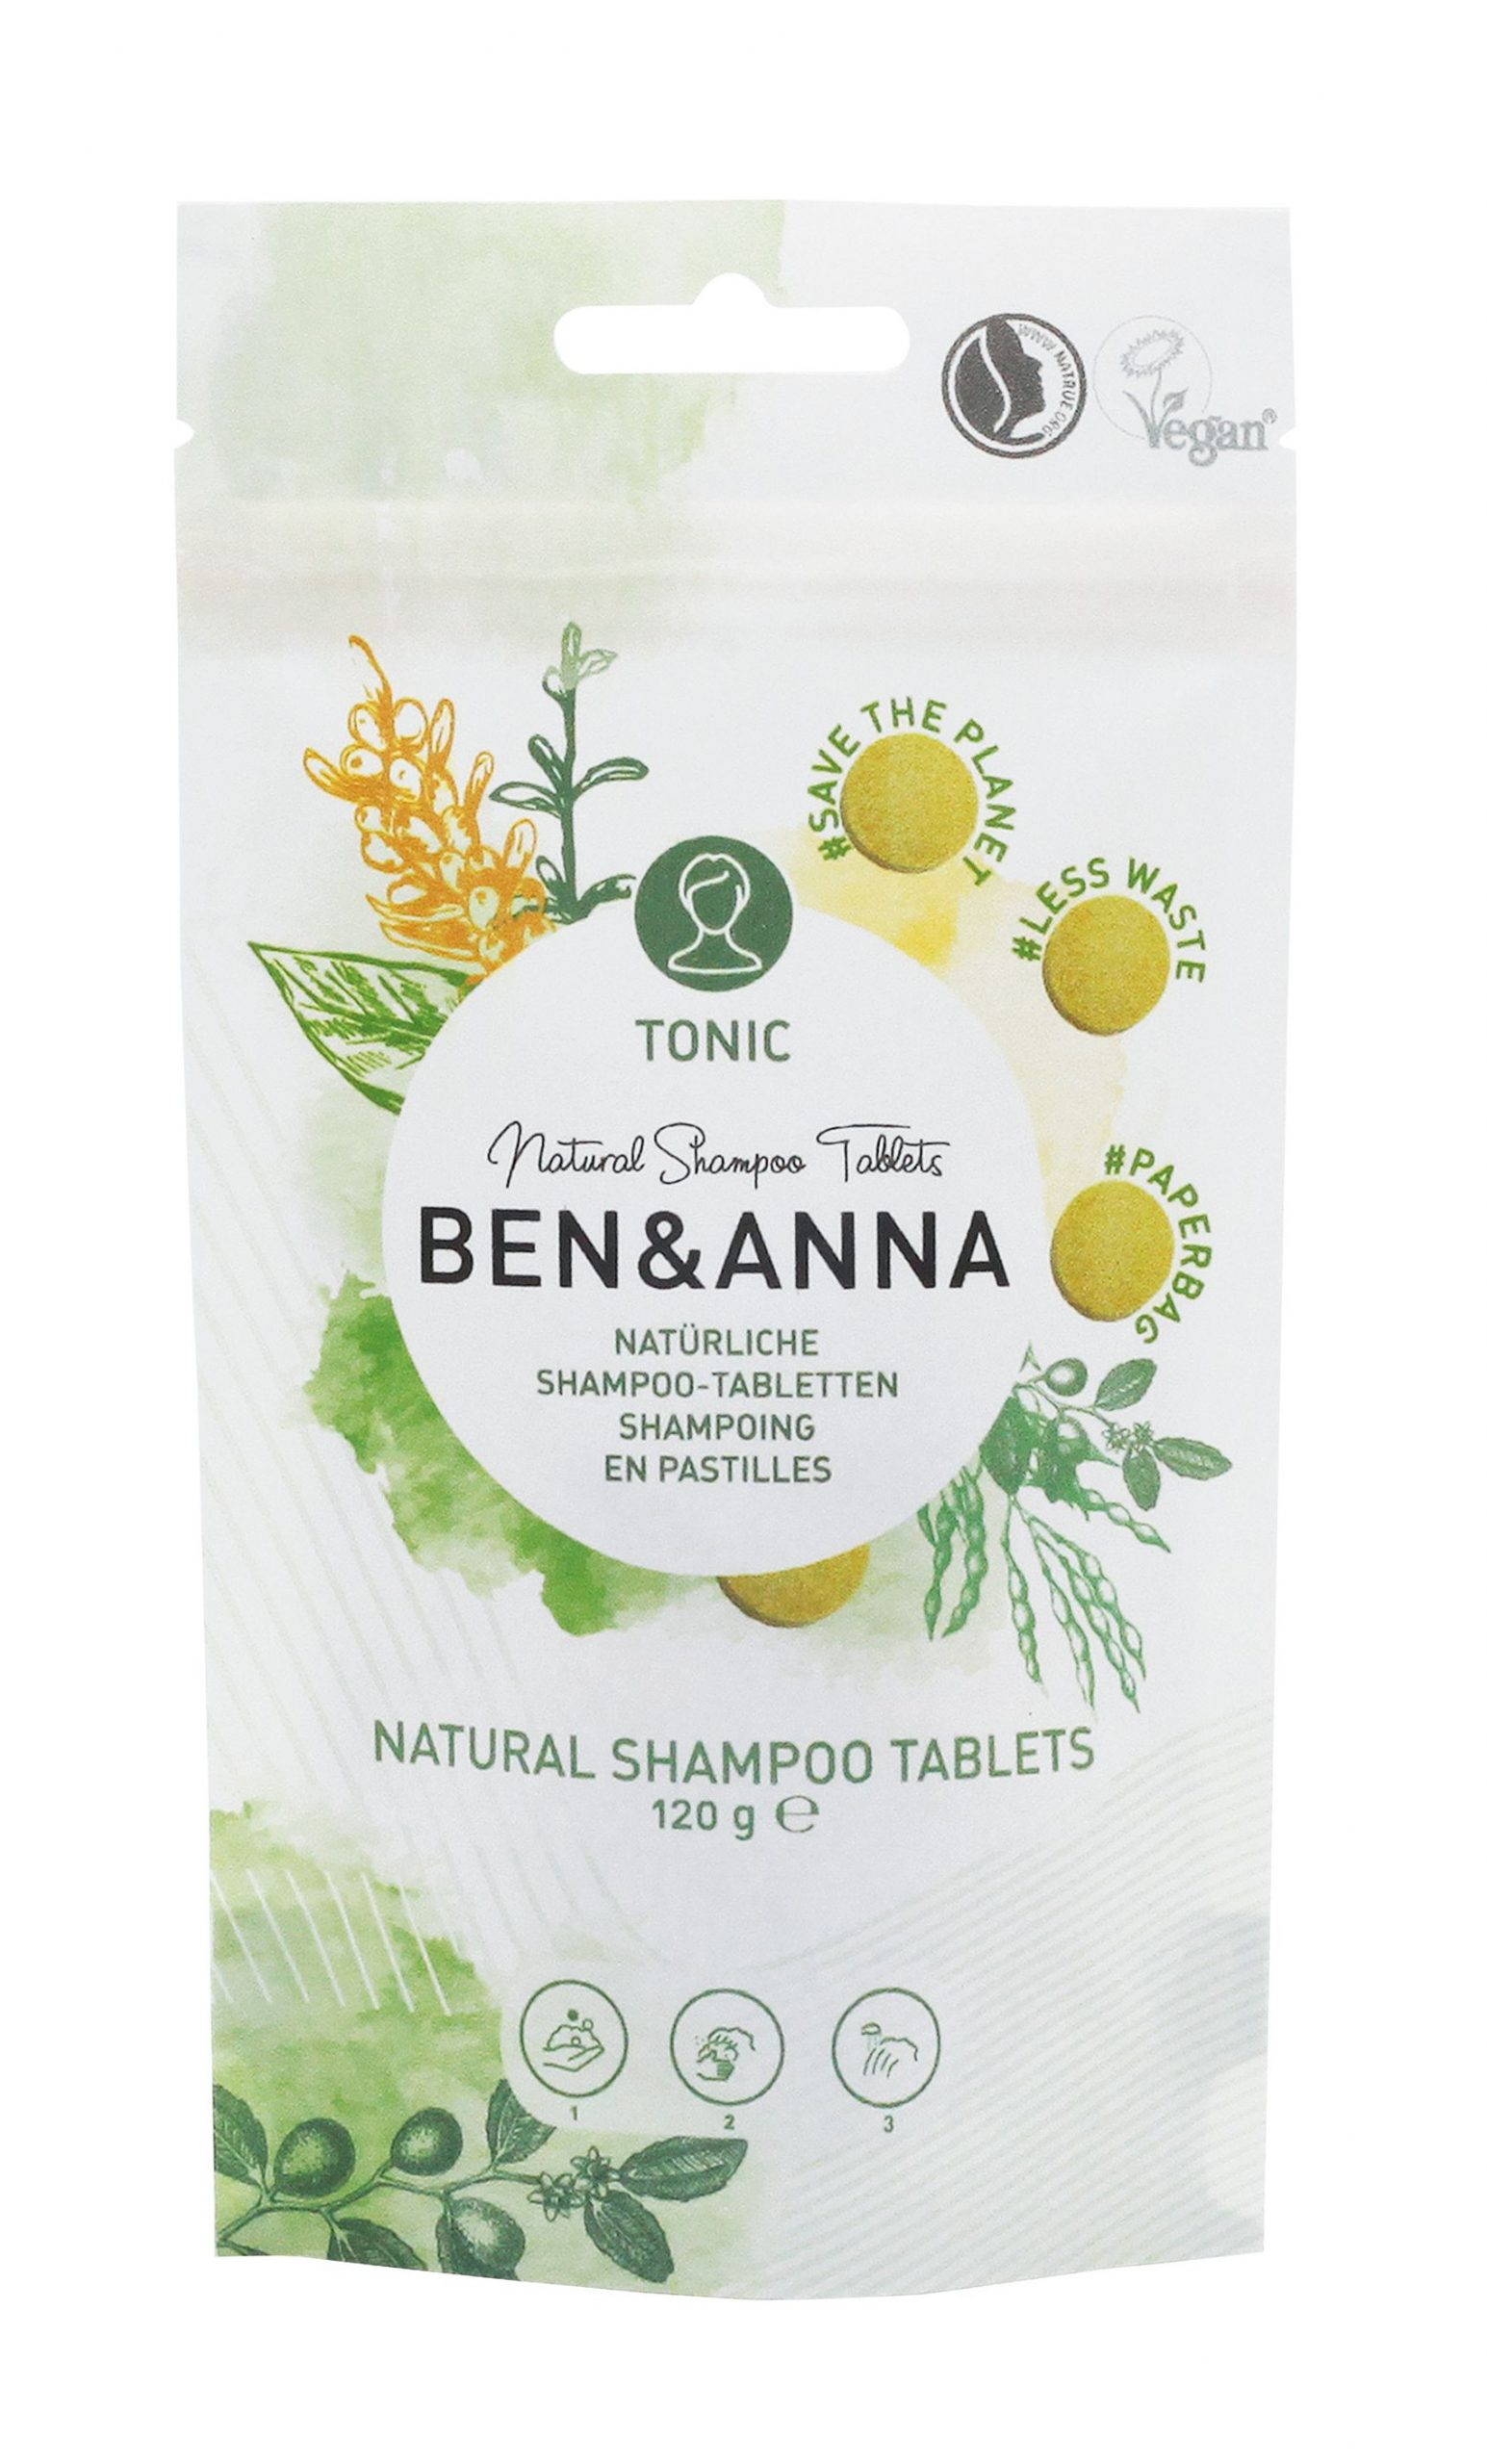 Šampón BEN&ANNA tablety, 120g – Tonic